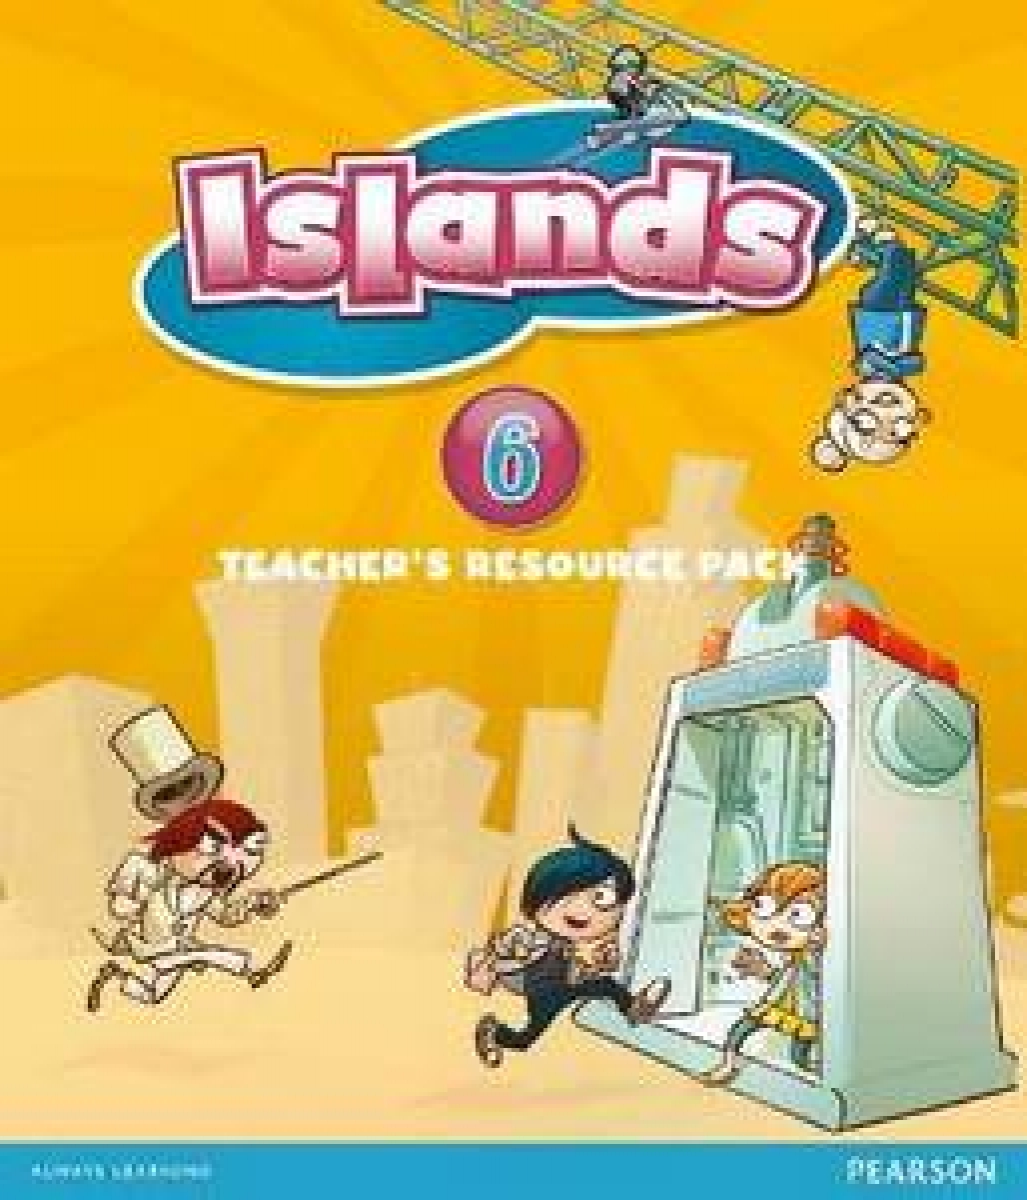 Custodio Magdalena Islands 6. Teacher's Pack 